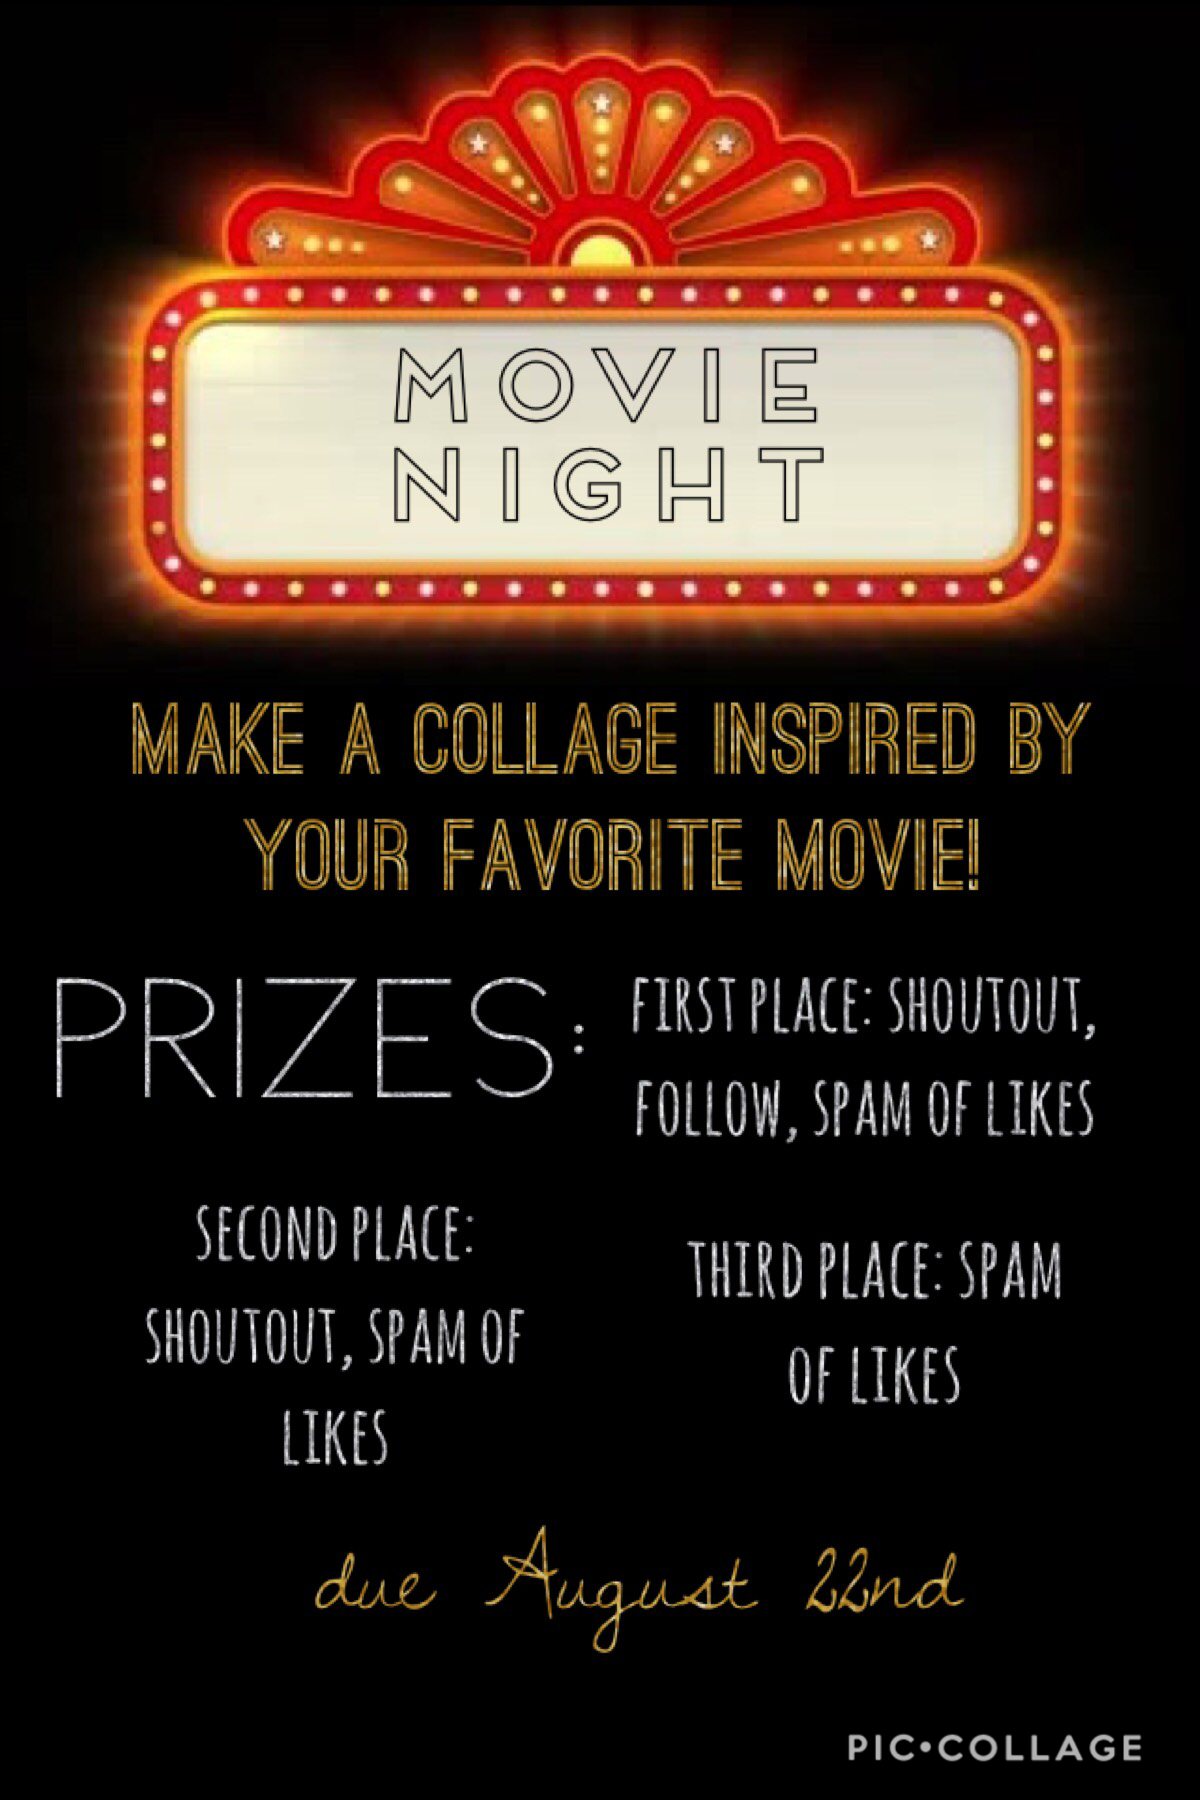 Movie Night Contest!